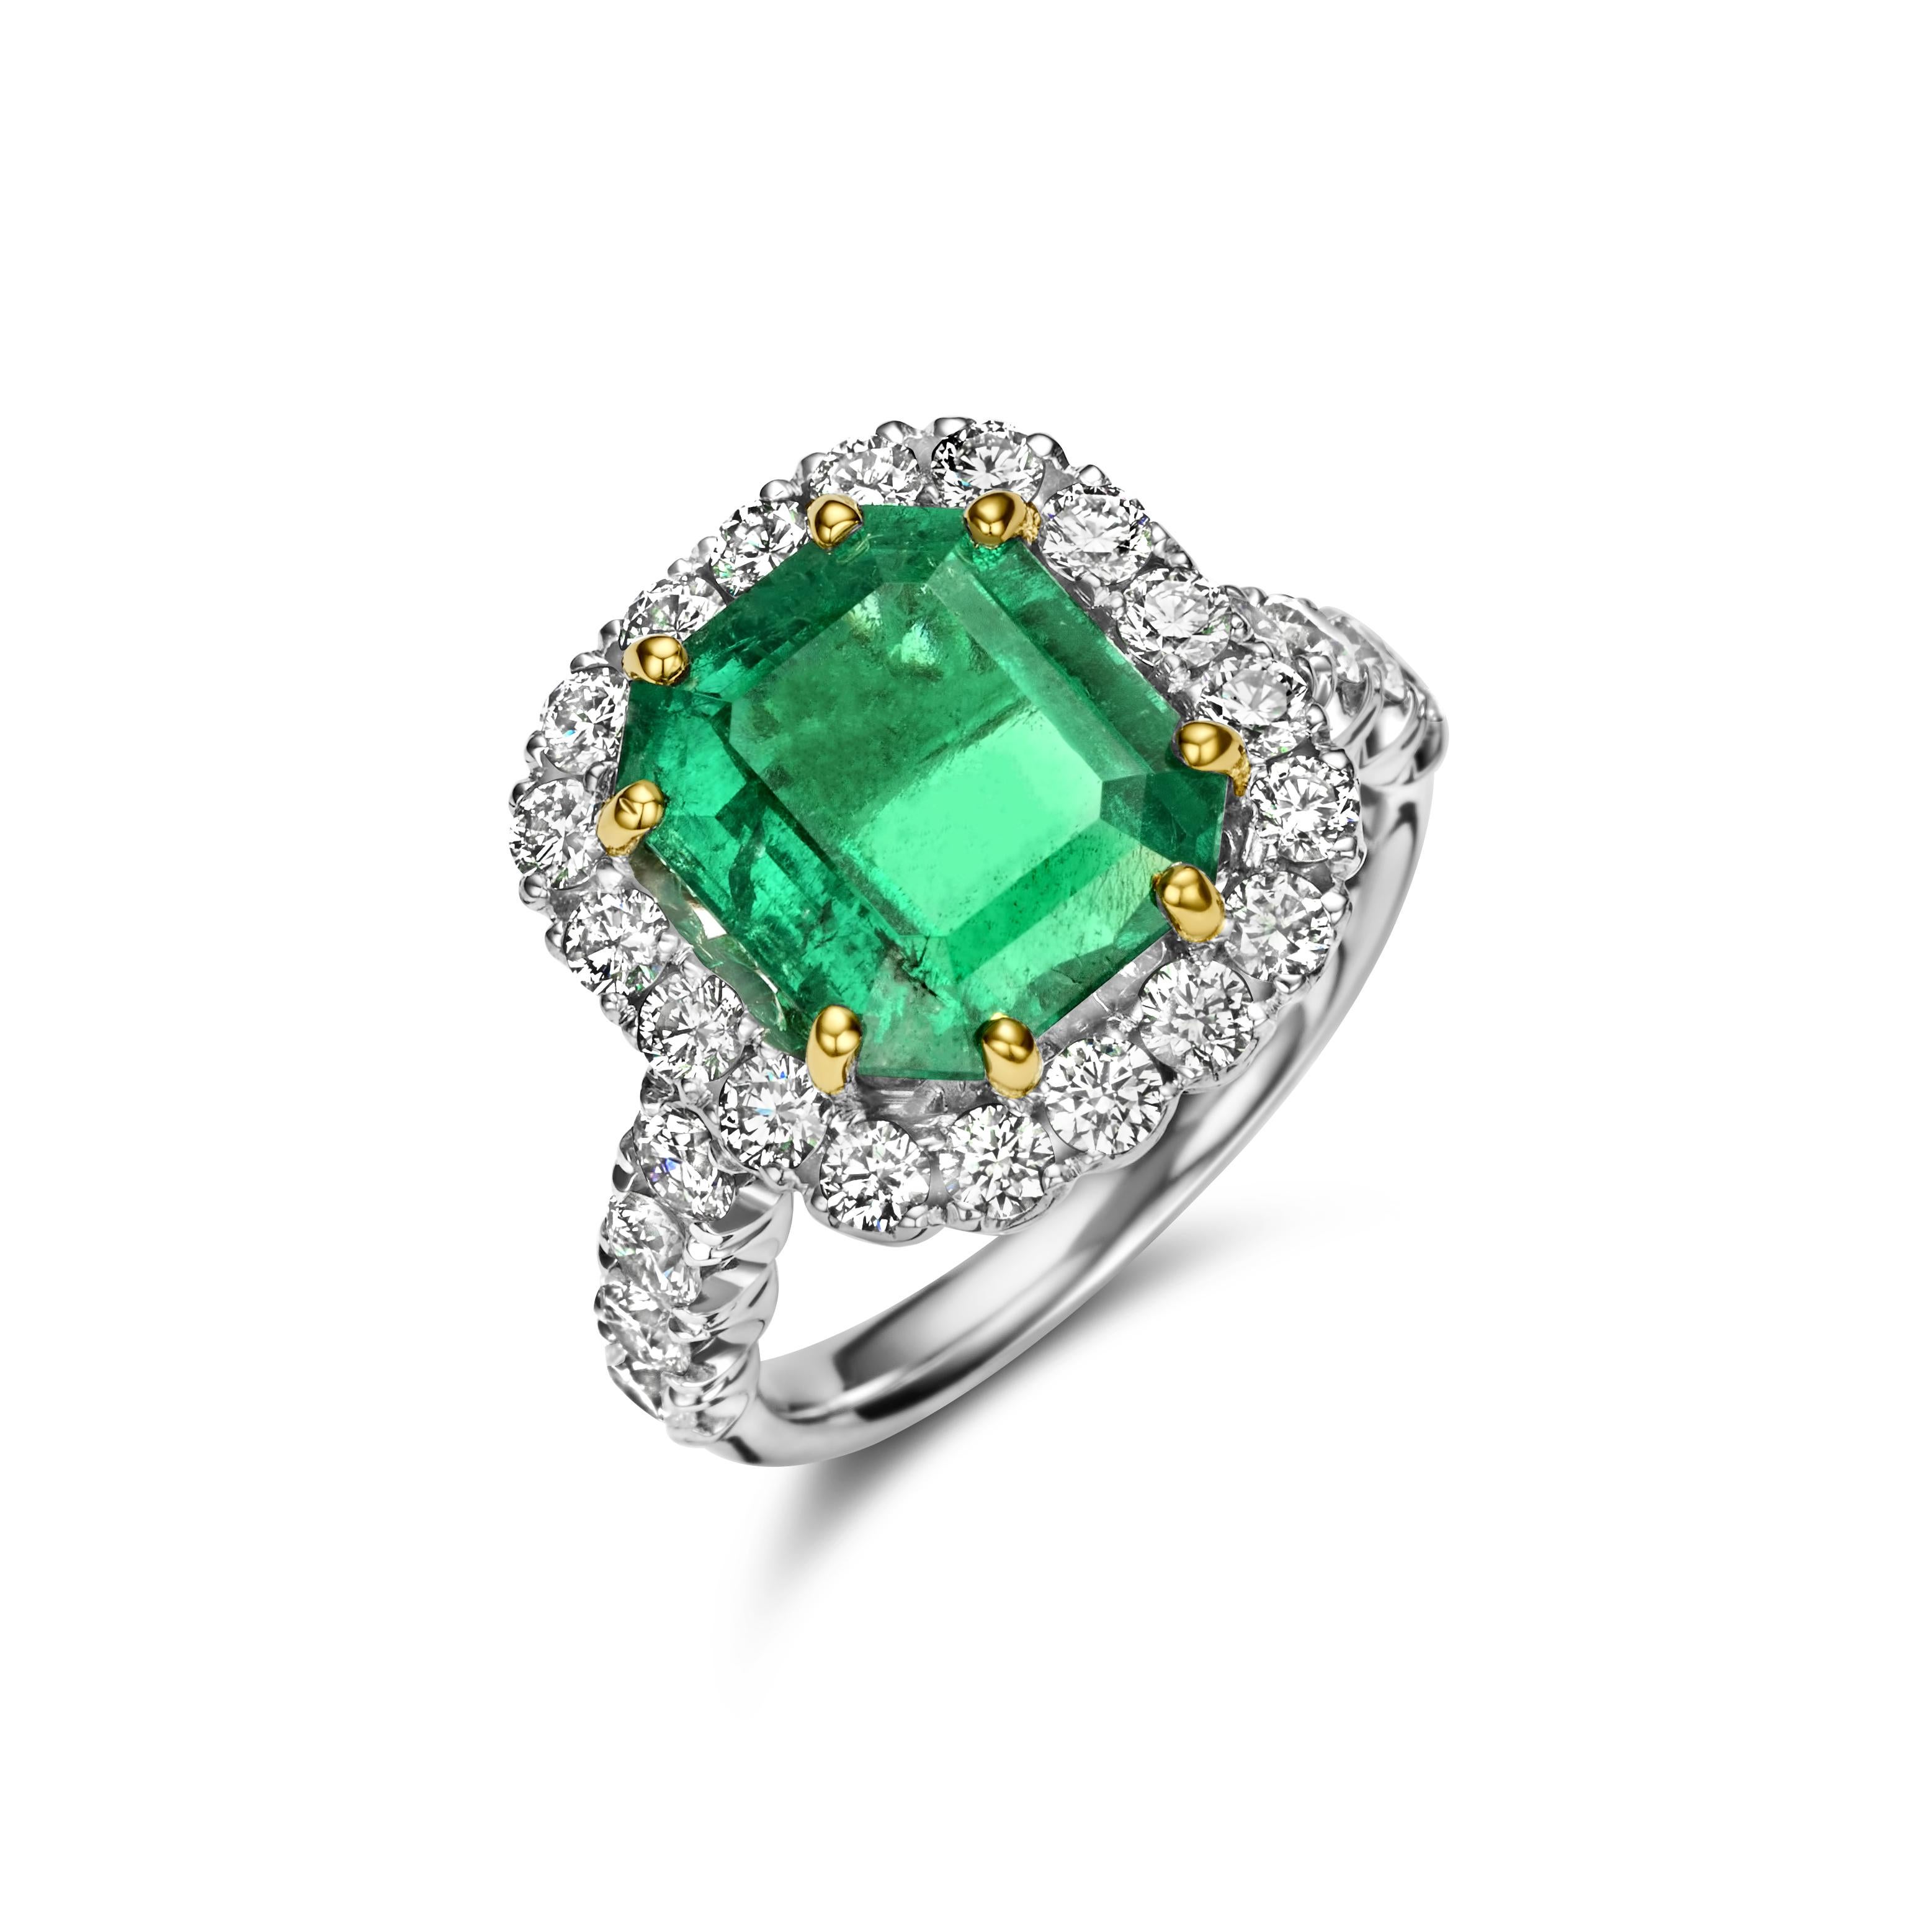 18kt Ring 4.83 Minor Emerald Diamonds CGL Certified.

Gorgeous 18 kt golden ring set with emerald and diamonds.

Emerald: 4.83 Carat, Octagonal / step cut, green, transparent, Beryl, emerald Origin: Colombia, Indications of minor clarity enhancement